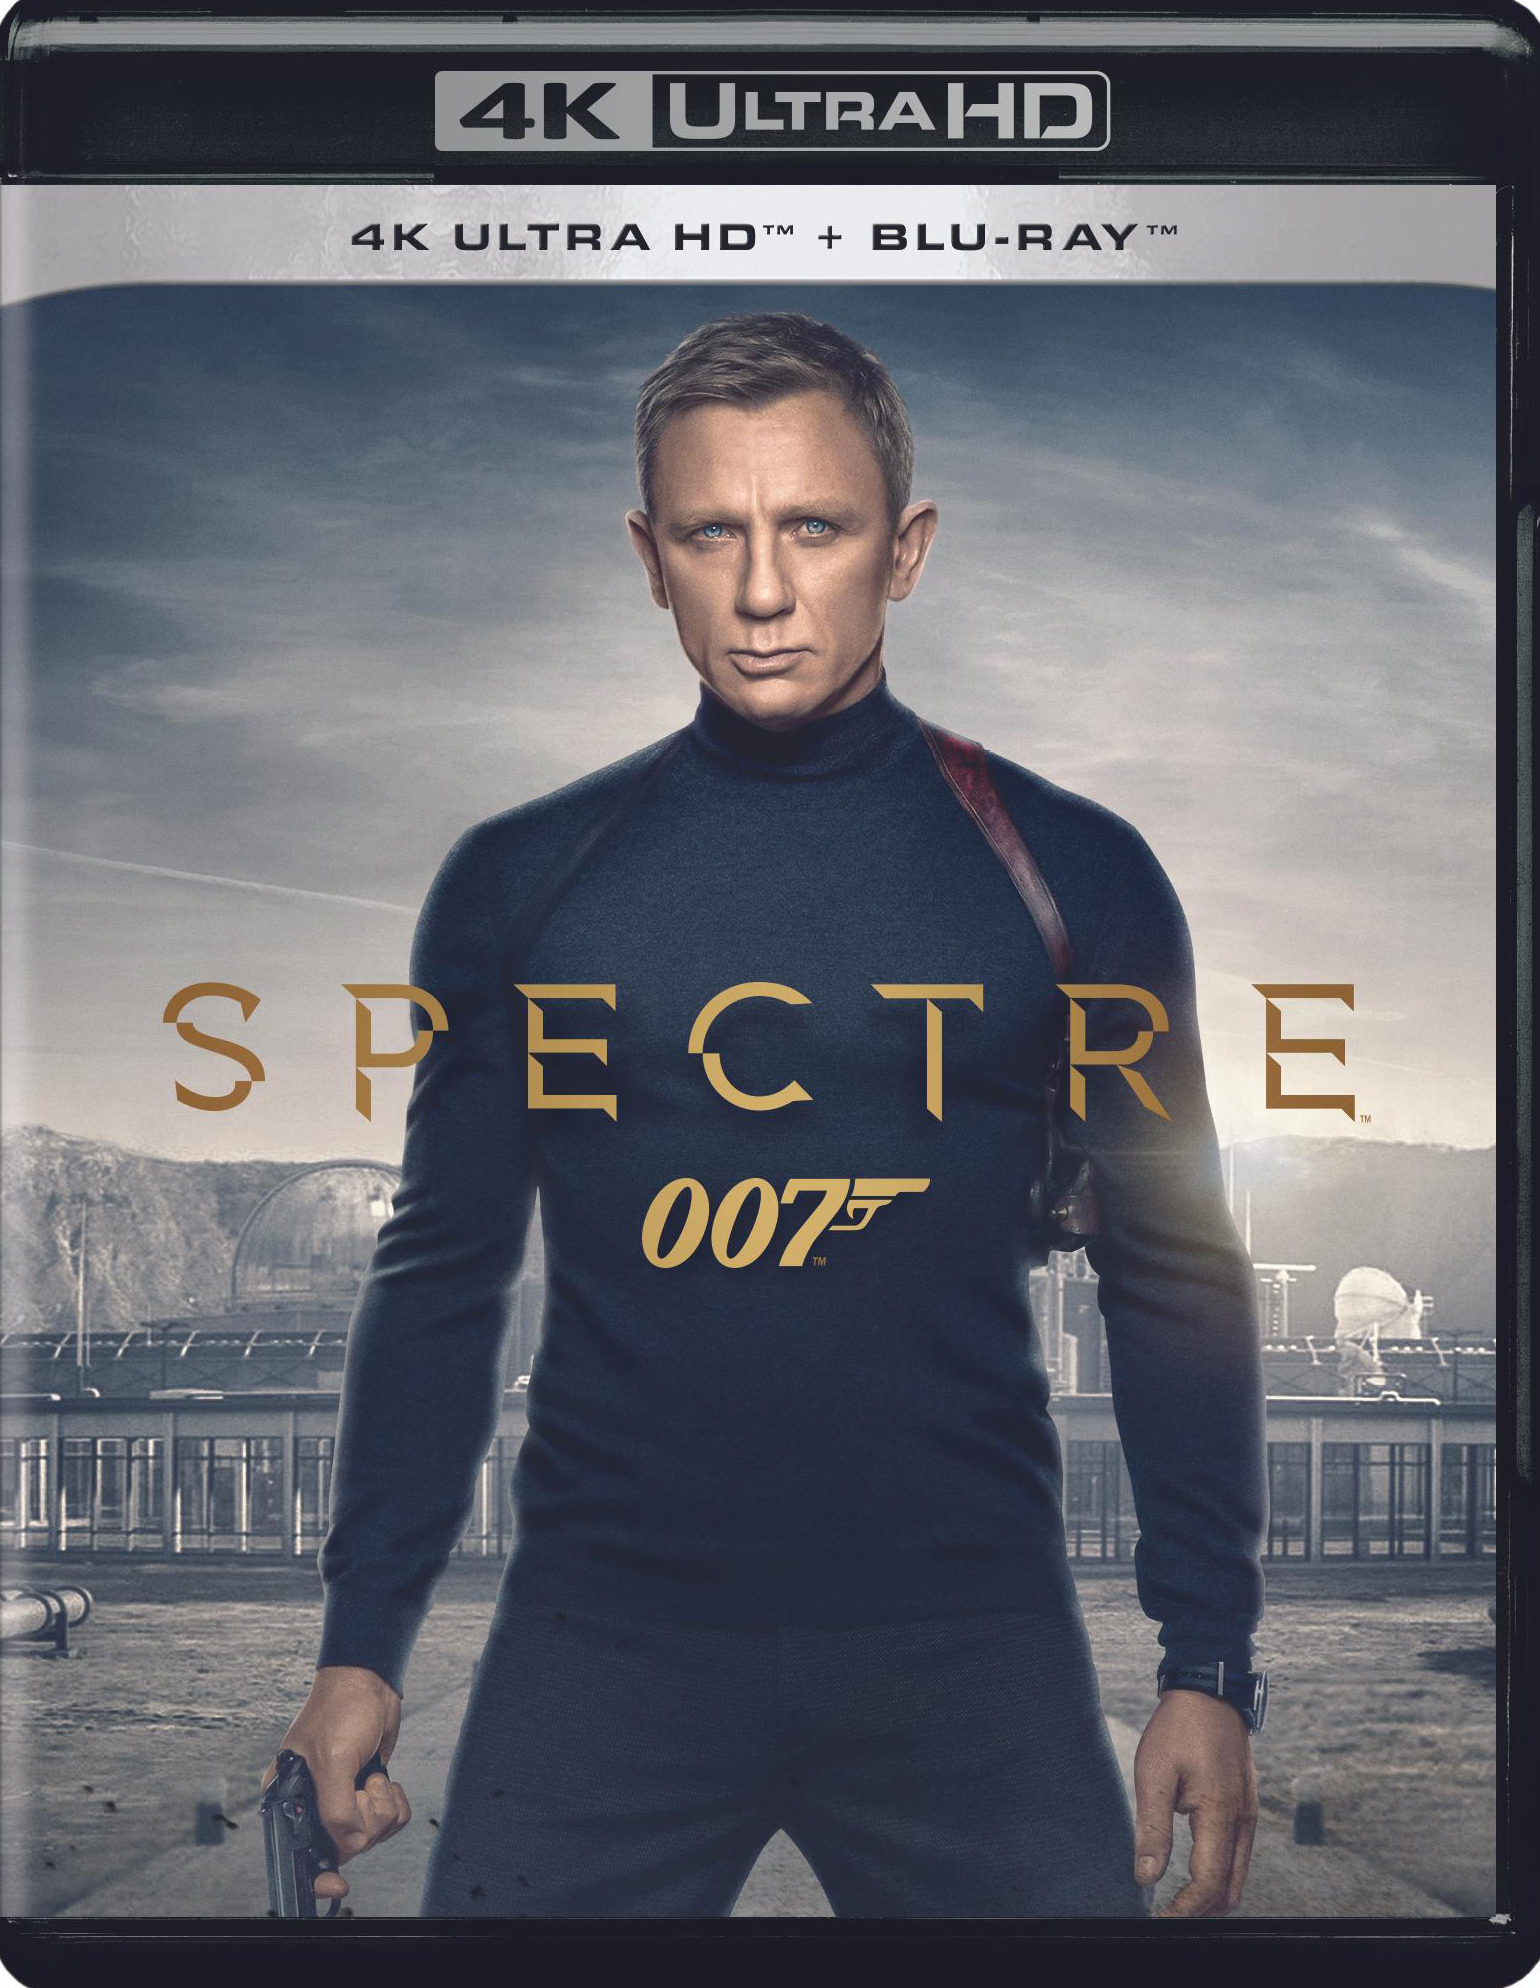 Stilk Visne skipper Spectre [4K Ultra HD Blu-ray/Blu-ray] [2015] - Best Buy